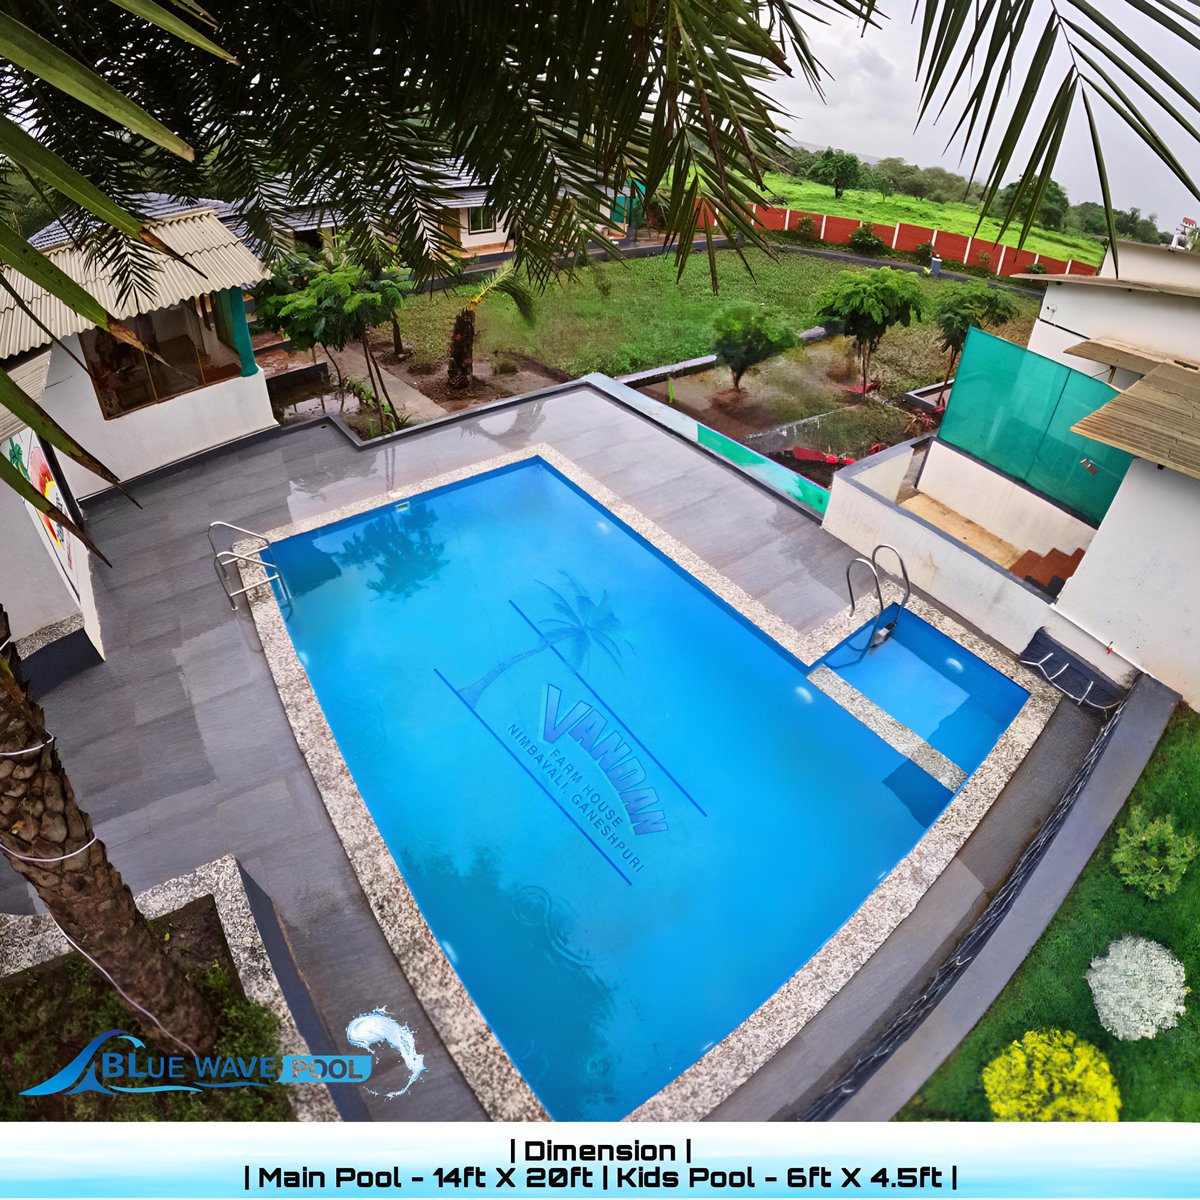 14ft X 20ft FRP LINER SWIMMING POOL FOR VANDAN FARMHOUSE - GANESHPURI - VAJRESHWARI,
BY @BlueWaveIndia 

#swimmingpool #swimming #MumbaiRains #mumbaicity #thanecityofficial #PoolParty #POOL  #poolday #lonavala #karjat #vajreshwari #matheran #farmhouse #villa #staycation #Travel